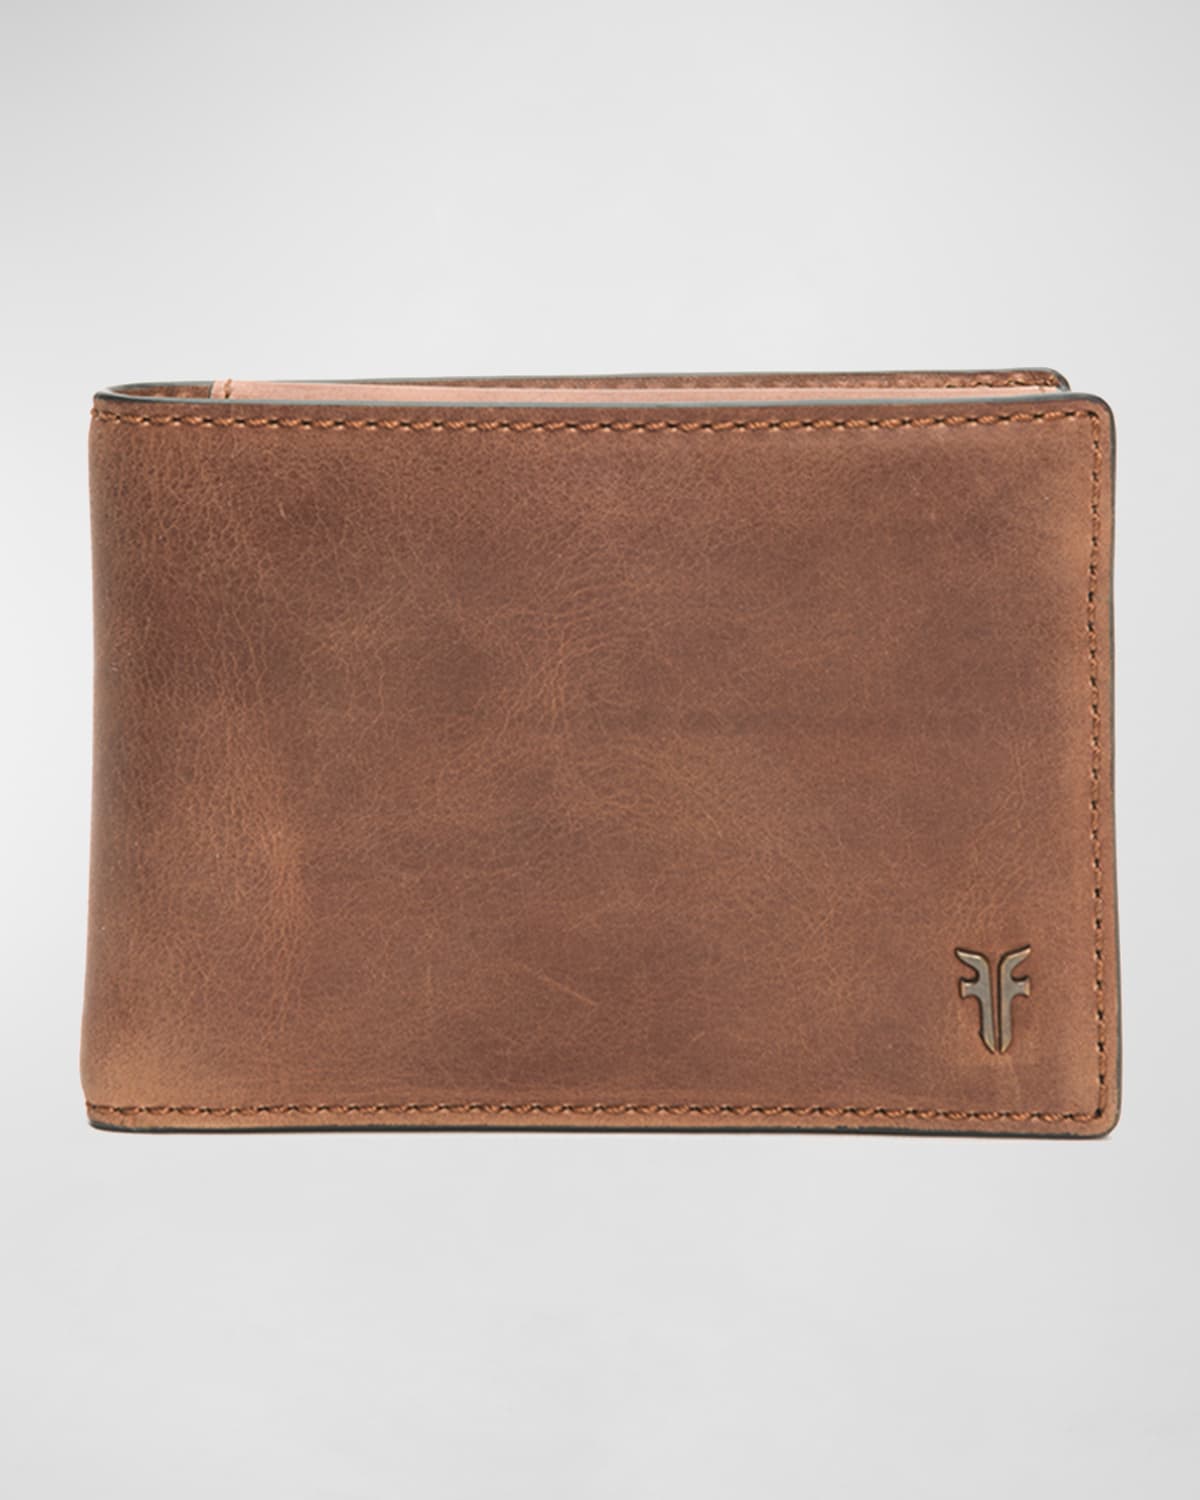 Frye Men's Holden Burnished Leather Passcase Wallet